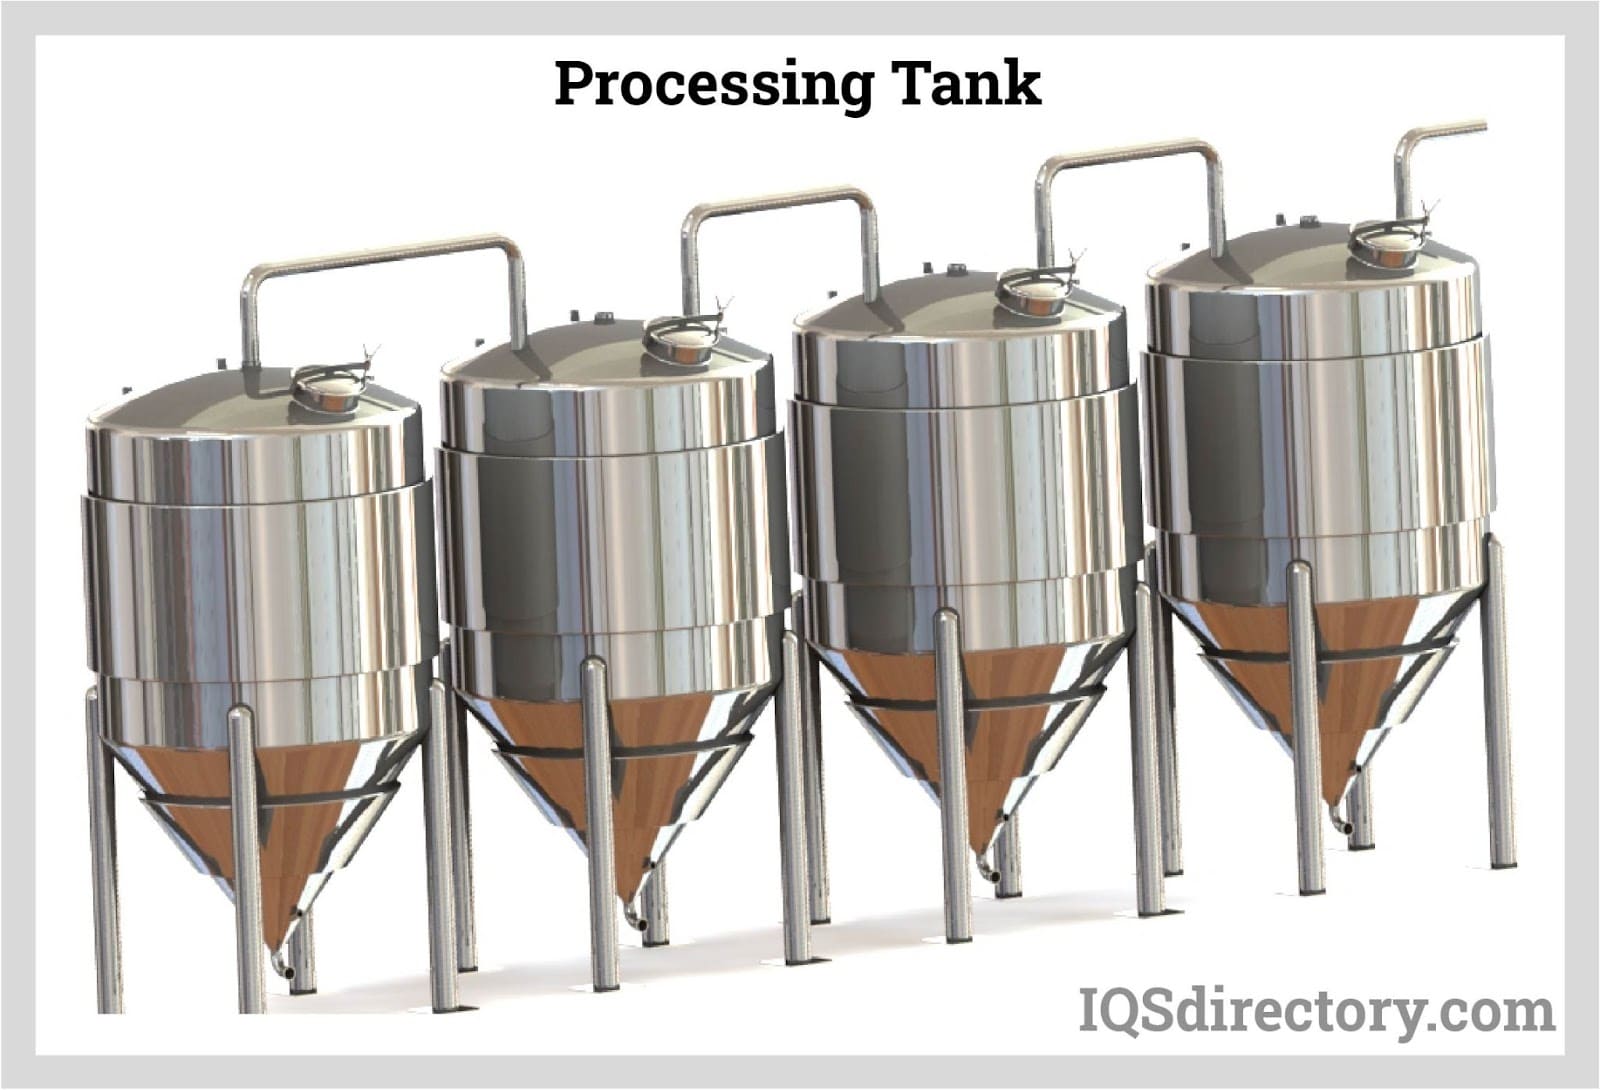 Processing Tank